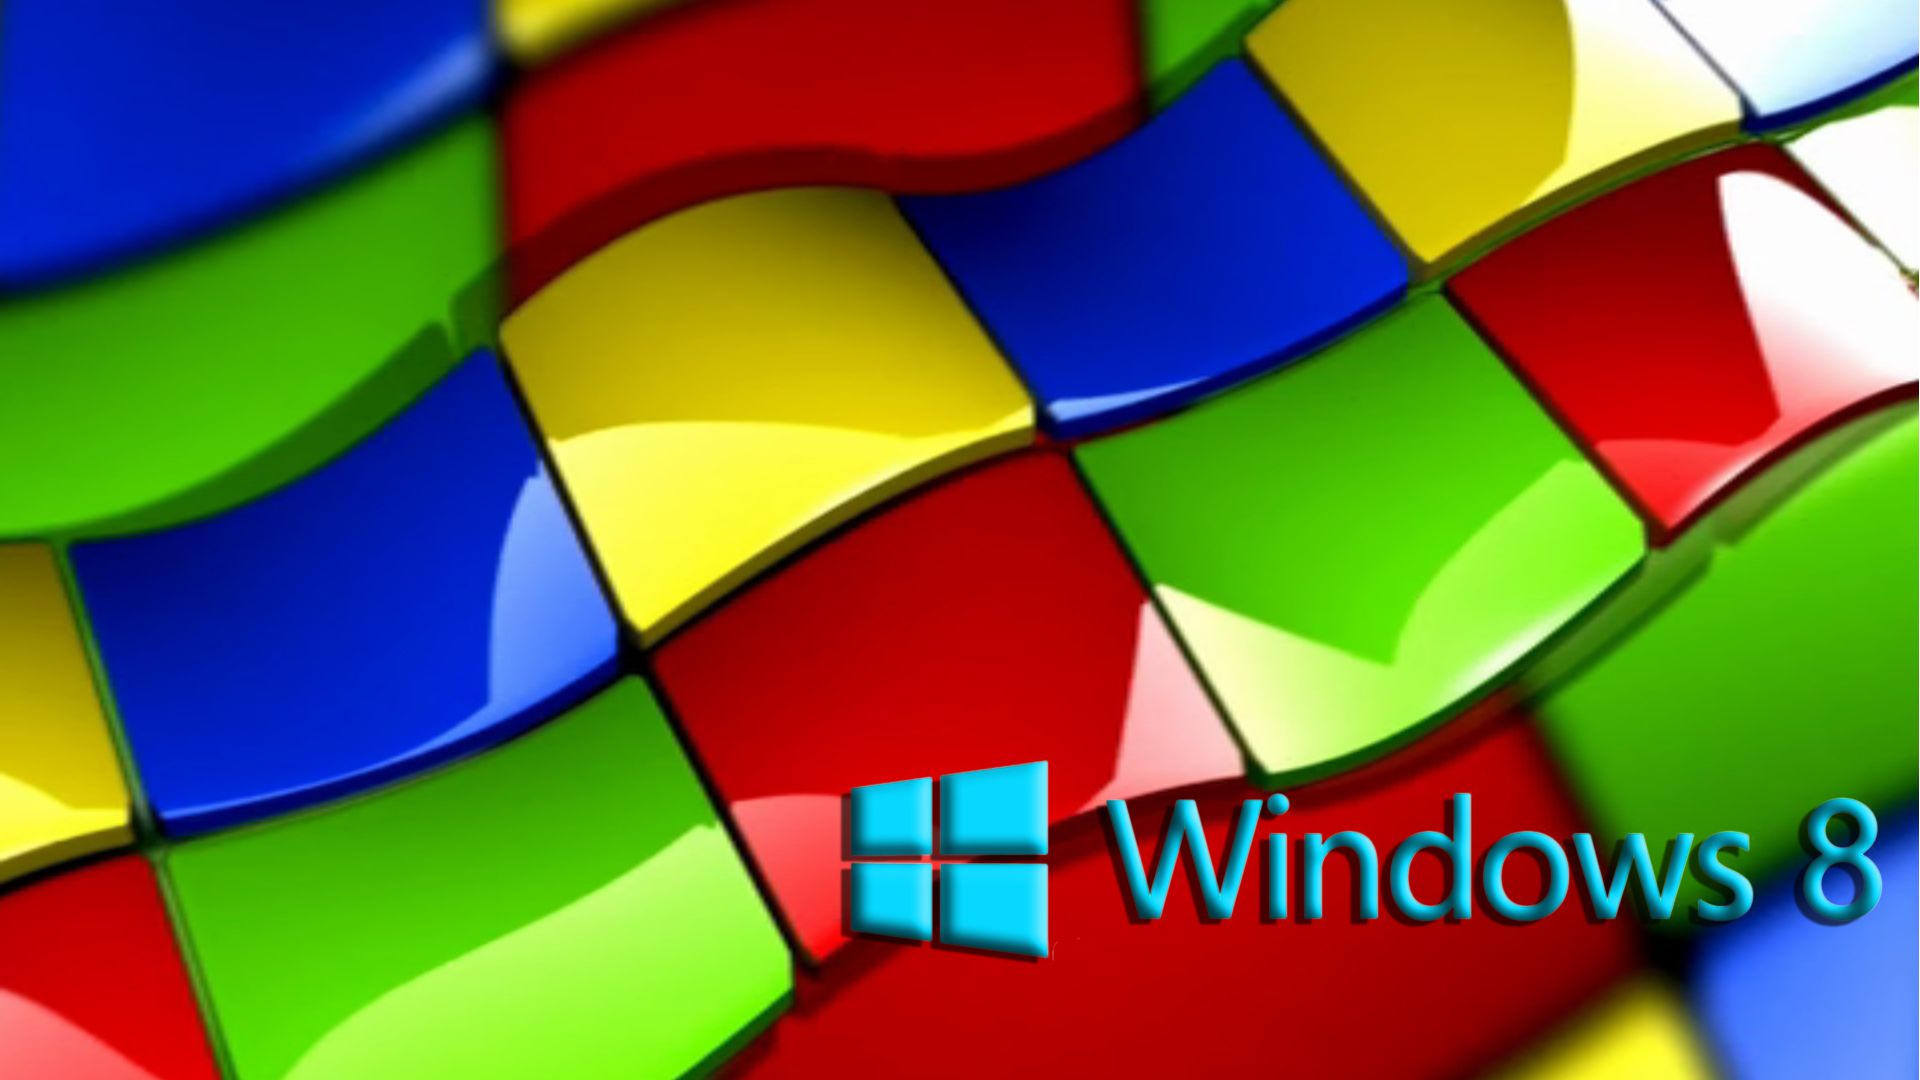 Windows 8 Backgrounds Wallpaper HD Free Download New HD